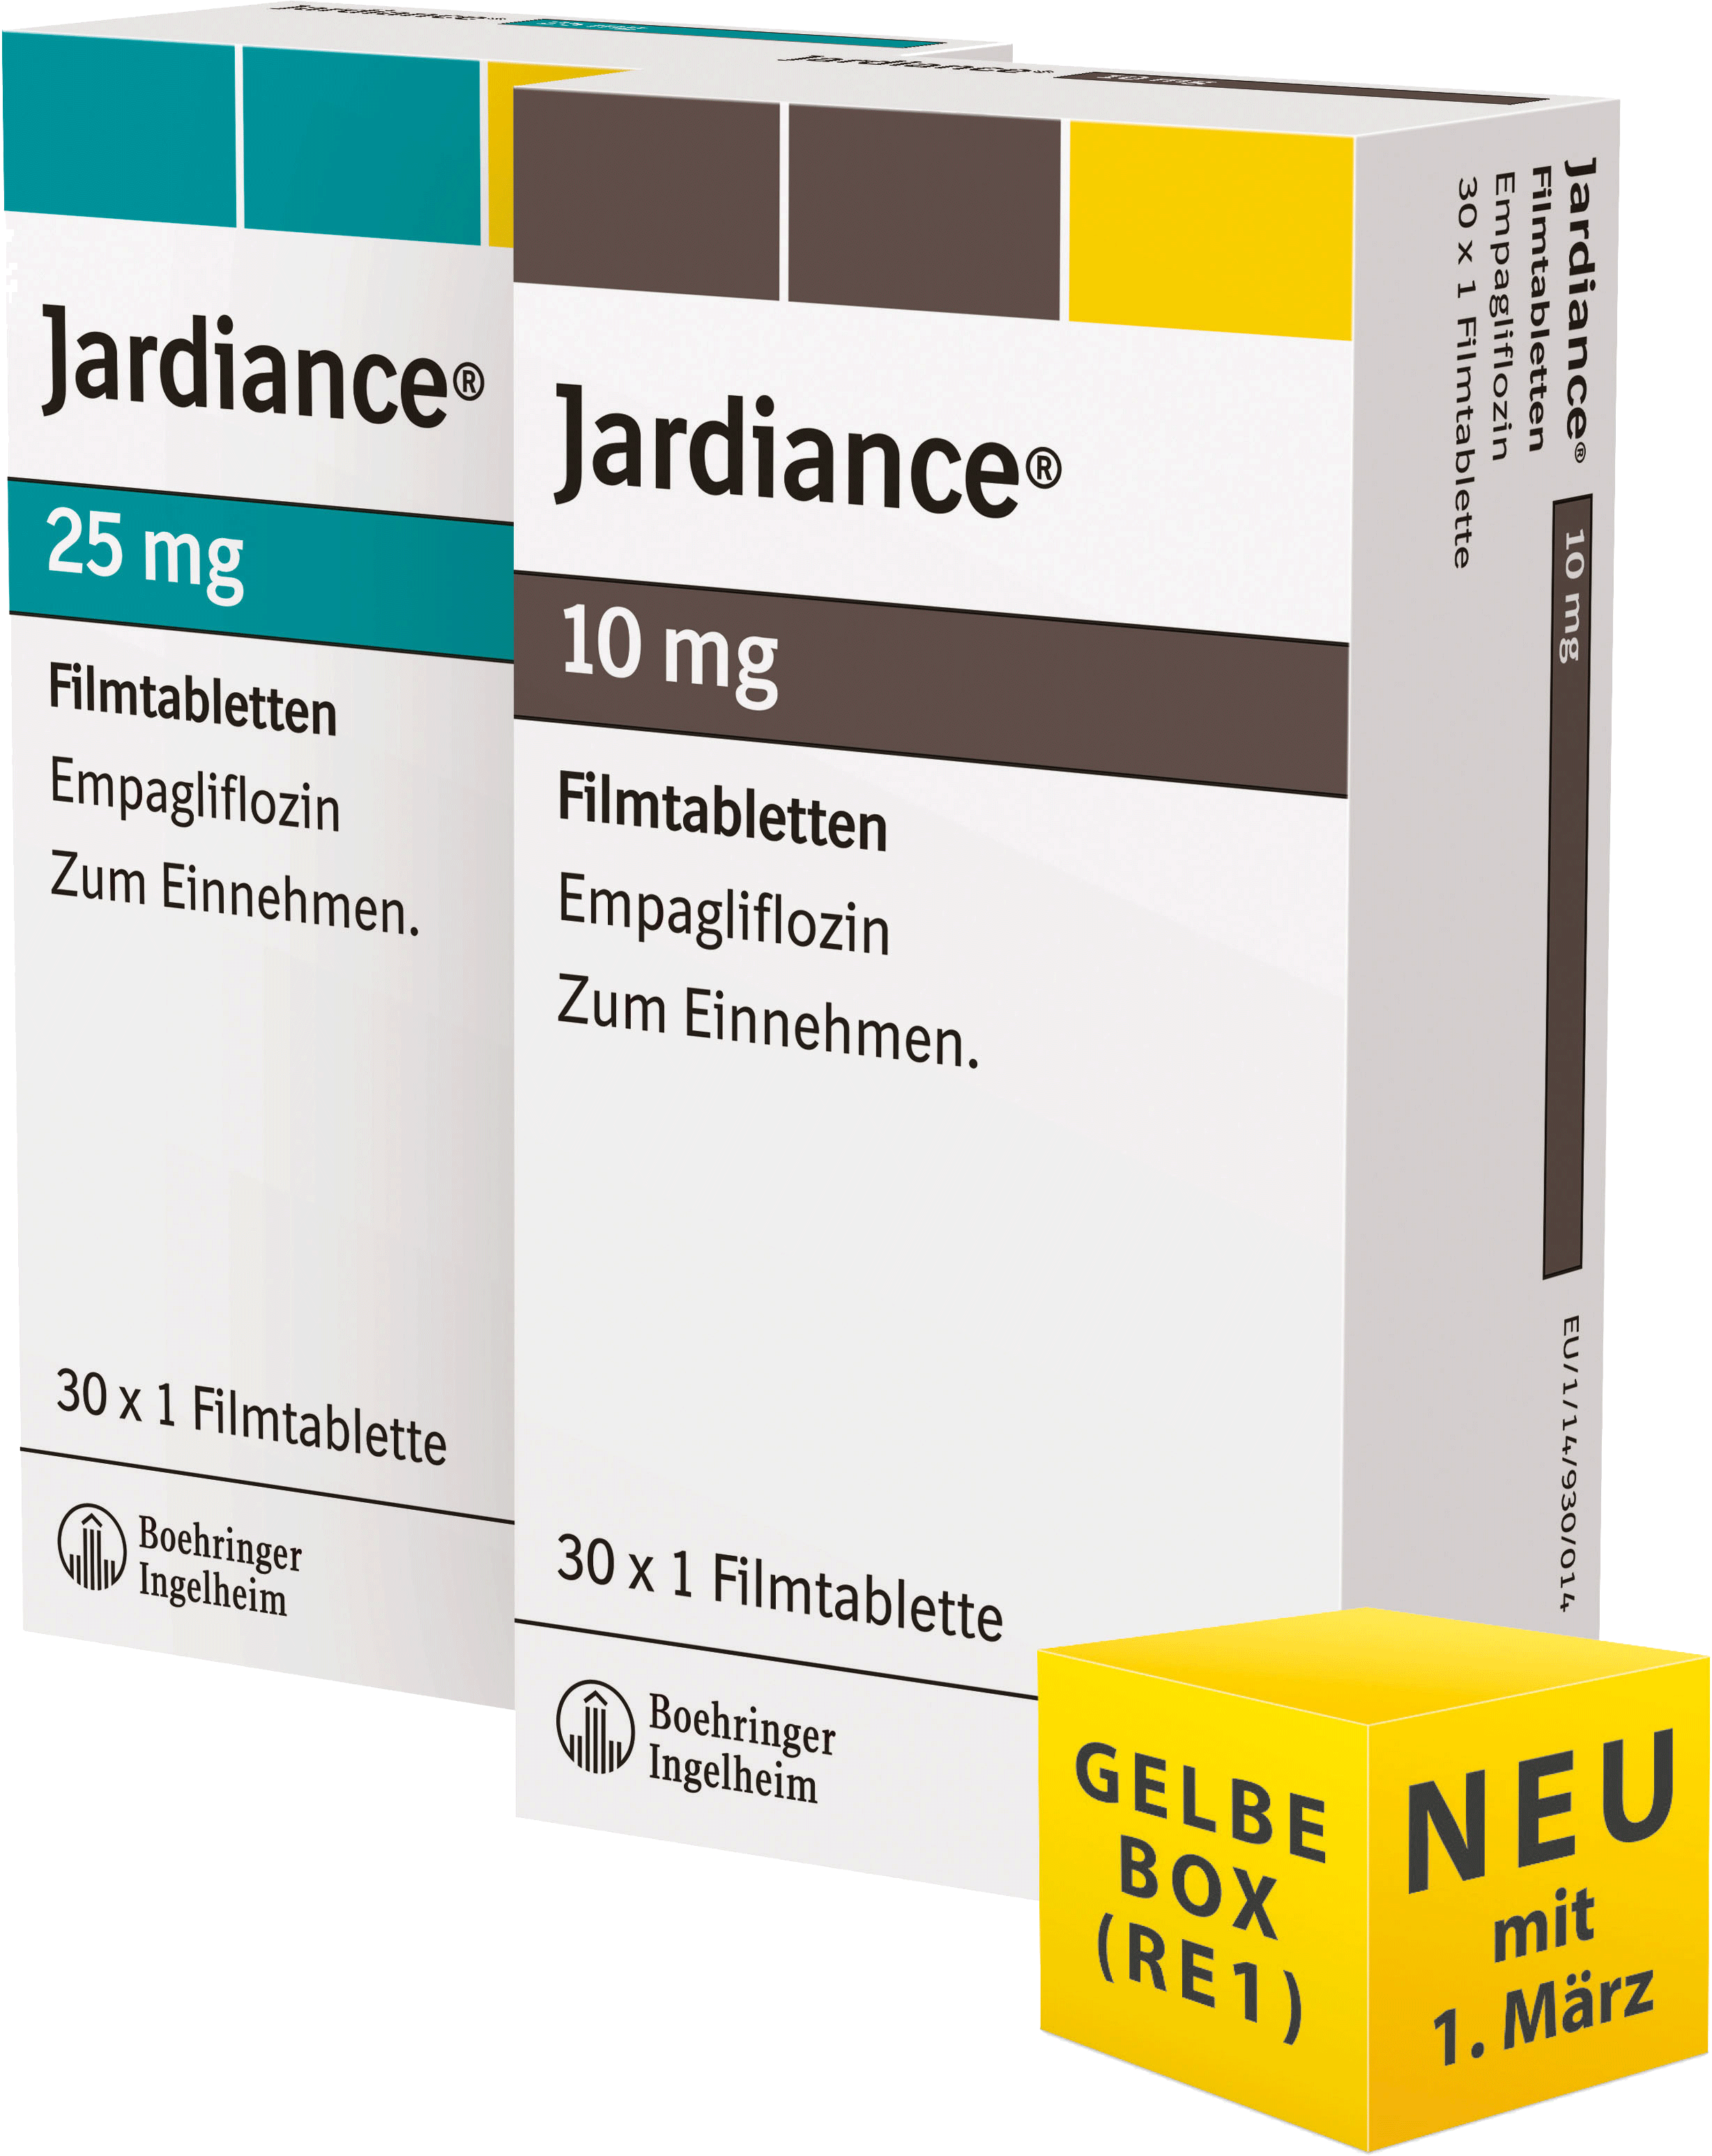 Таблетки Джардинс 25мл. Джардинс 10мг 30. Джардинс 5 мг. Лекарство от диабета Джардинс. Джардинс отзывы врачей